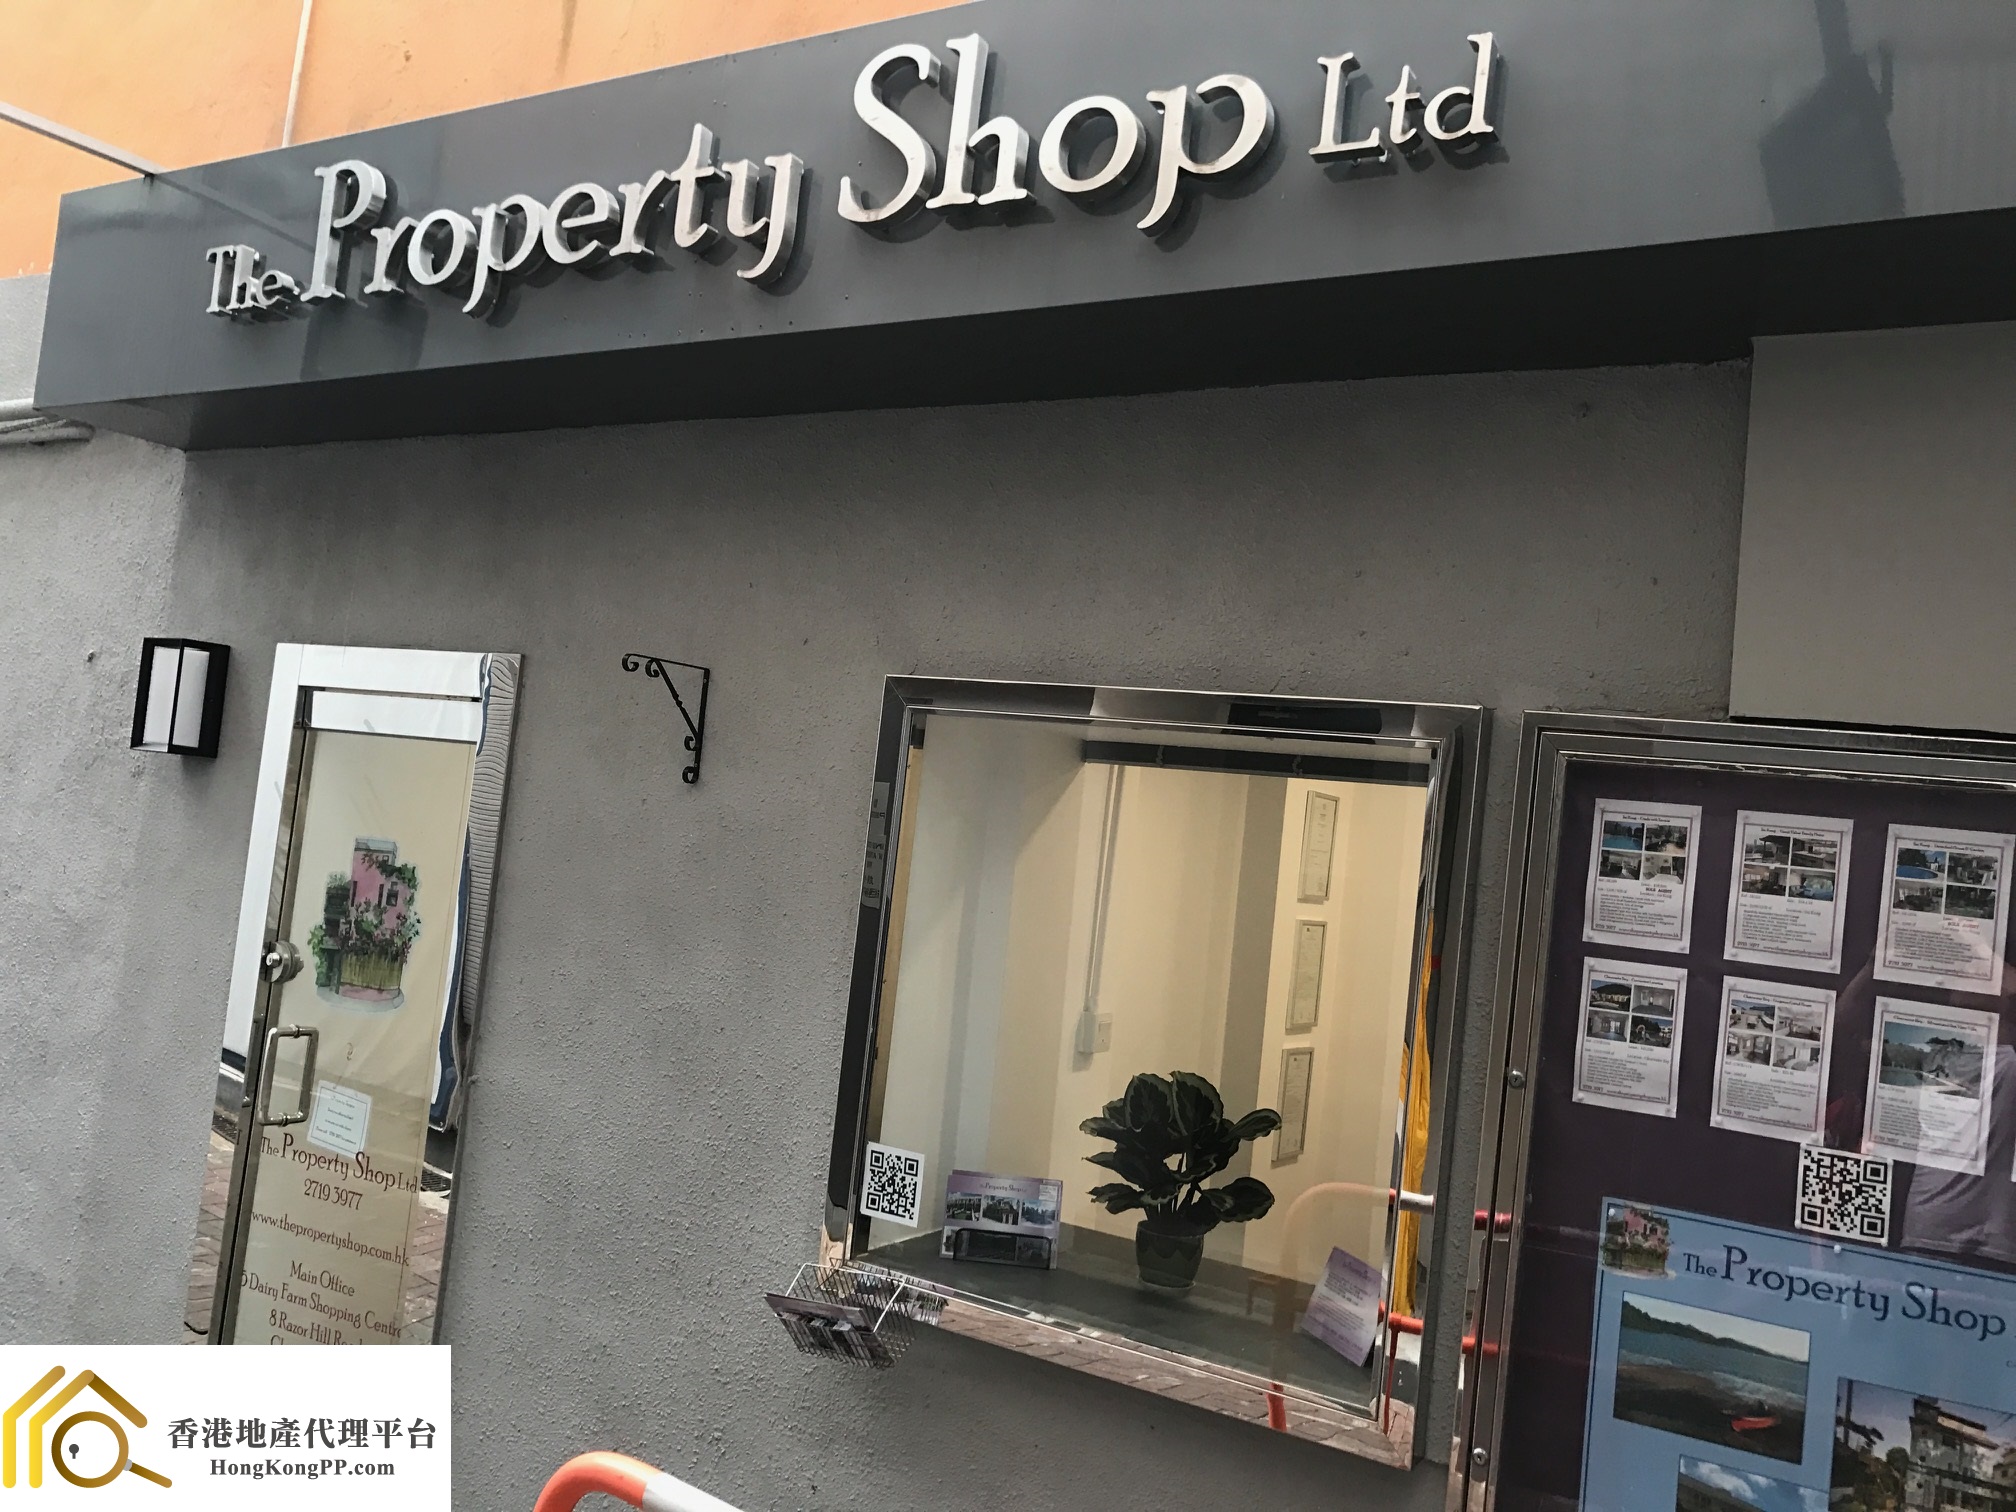 住宅地產代理: The Property Shop (Sai Kung)